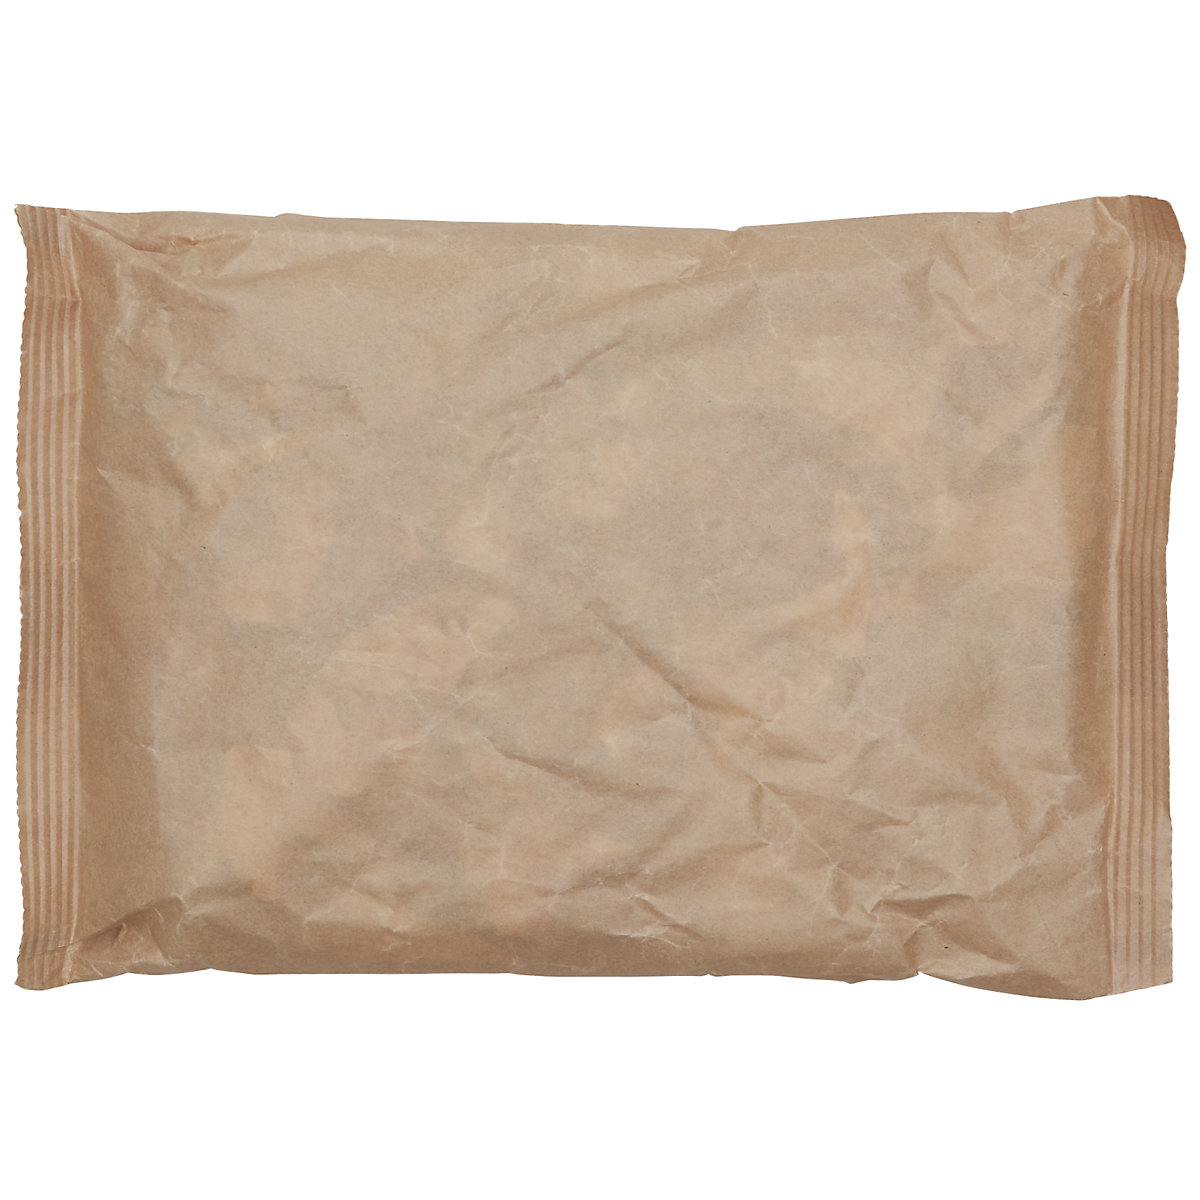 ECO CUSHION paper cushion pad